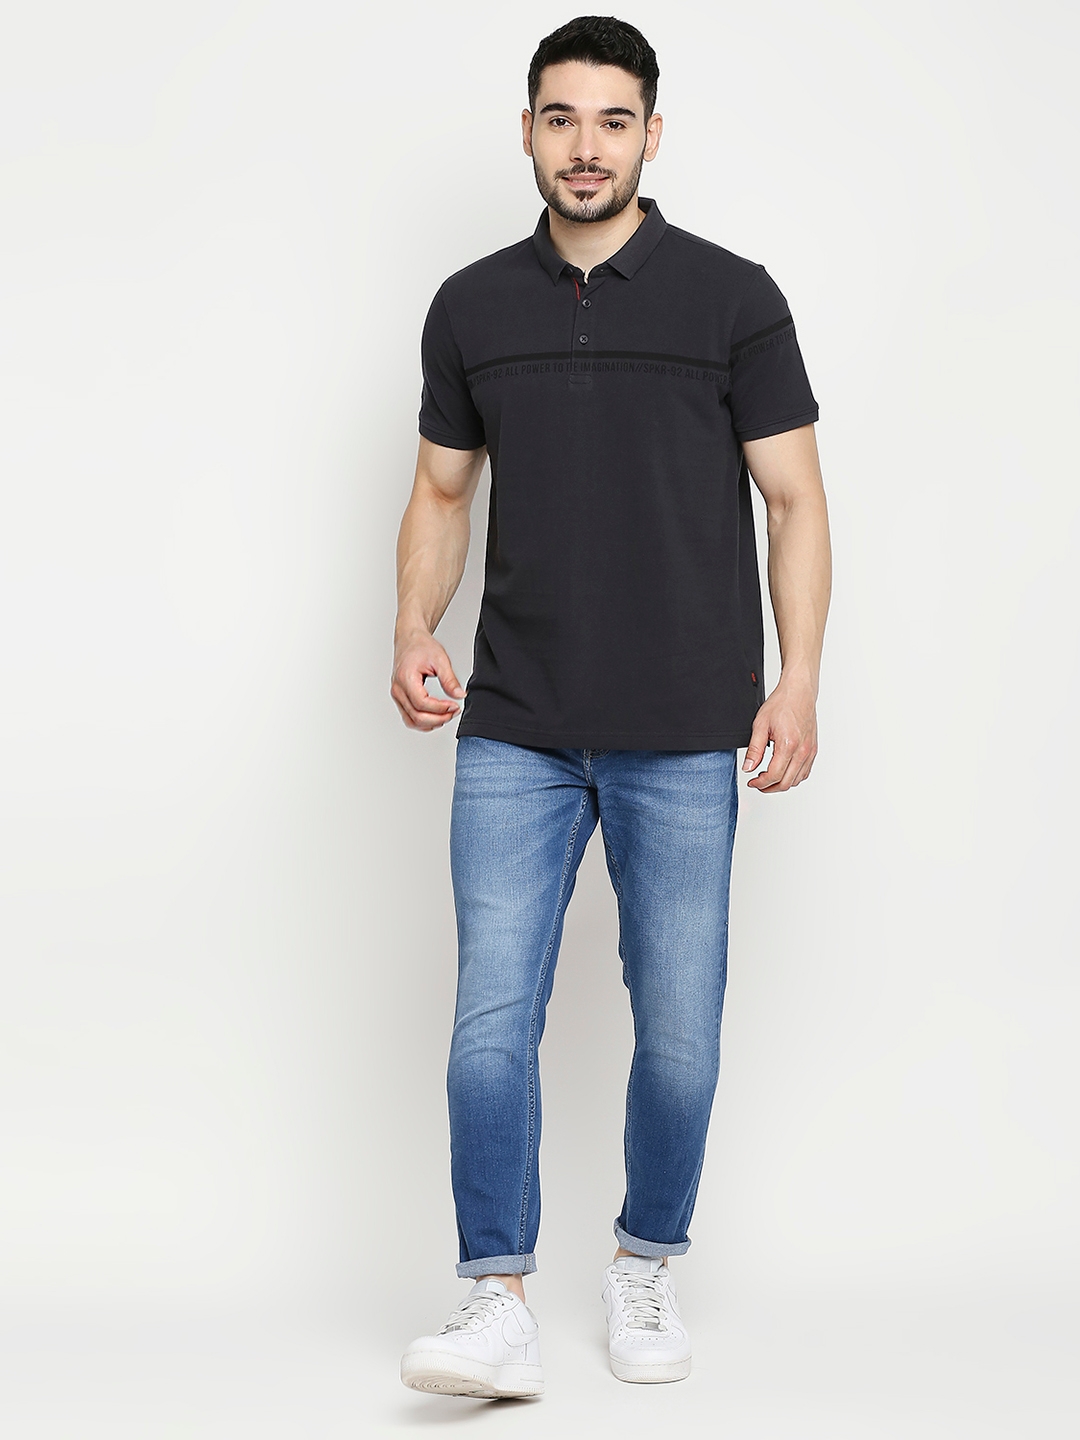 spykar | Spykar Slate Grey Cotton Half Sleeve Printed Casual T-Shirt For Men 5